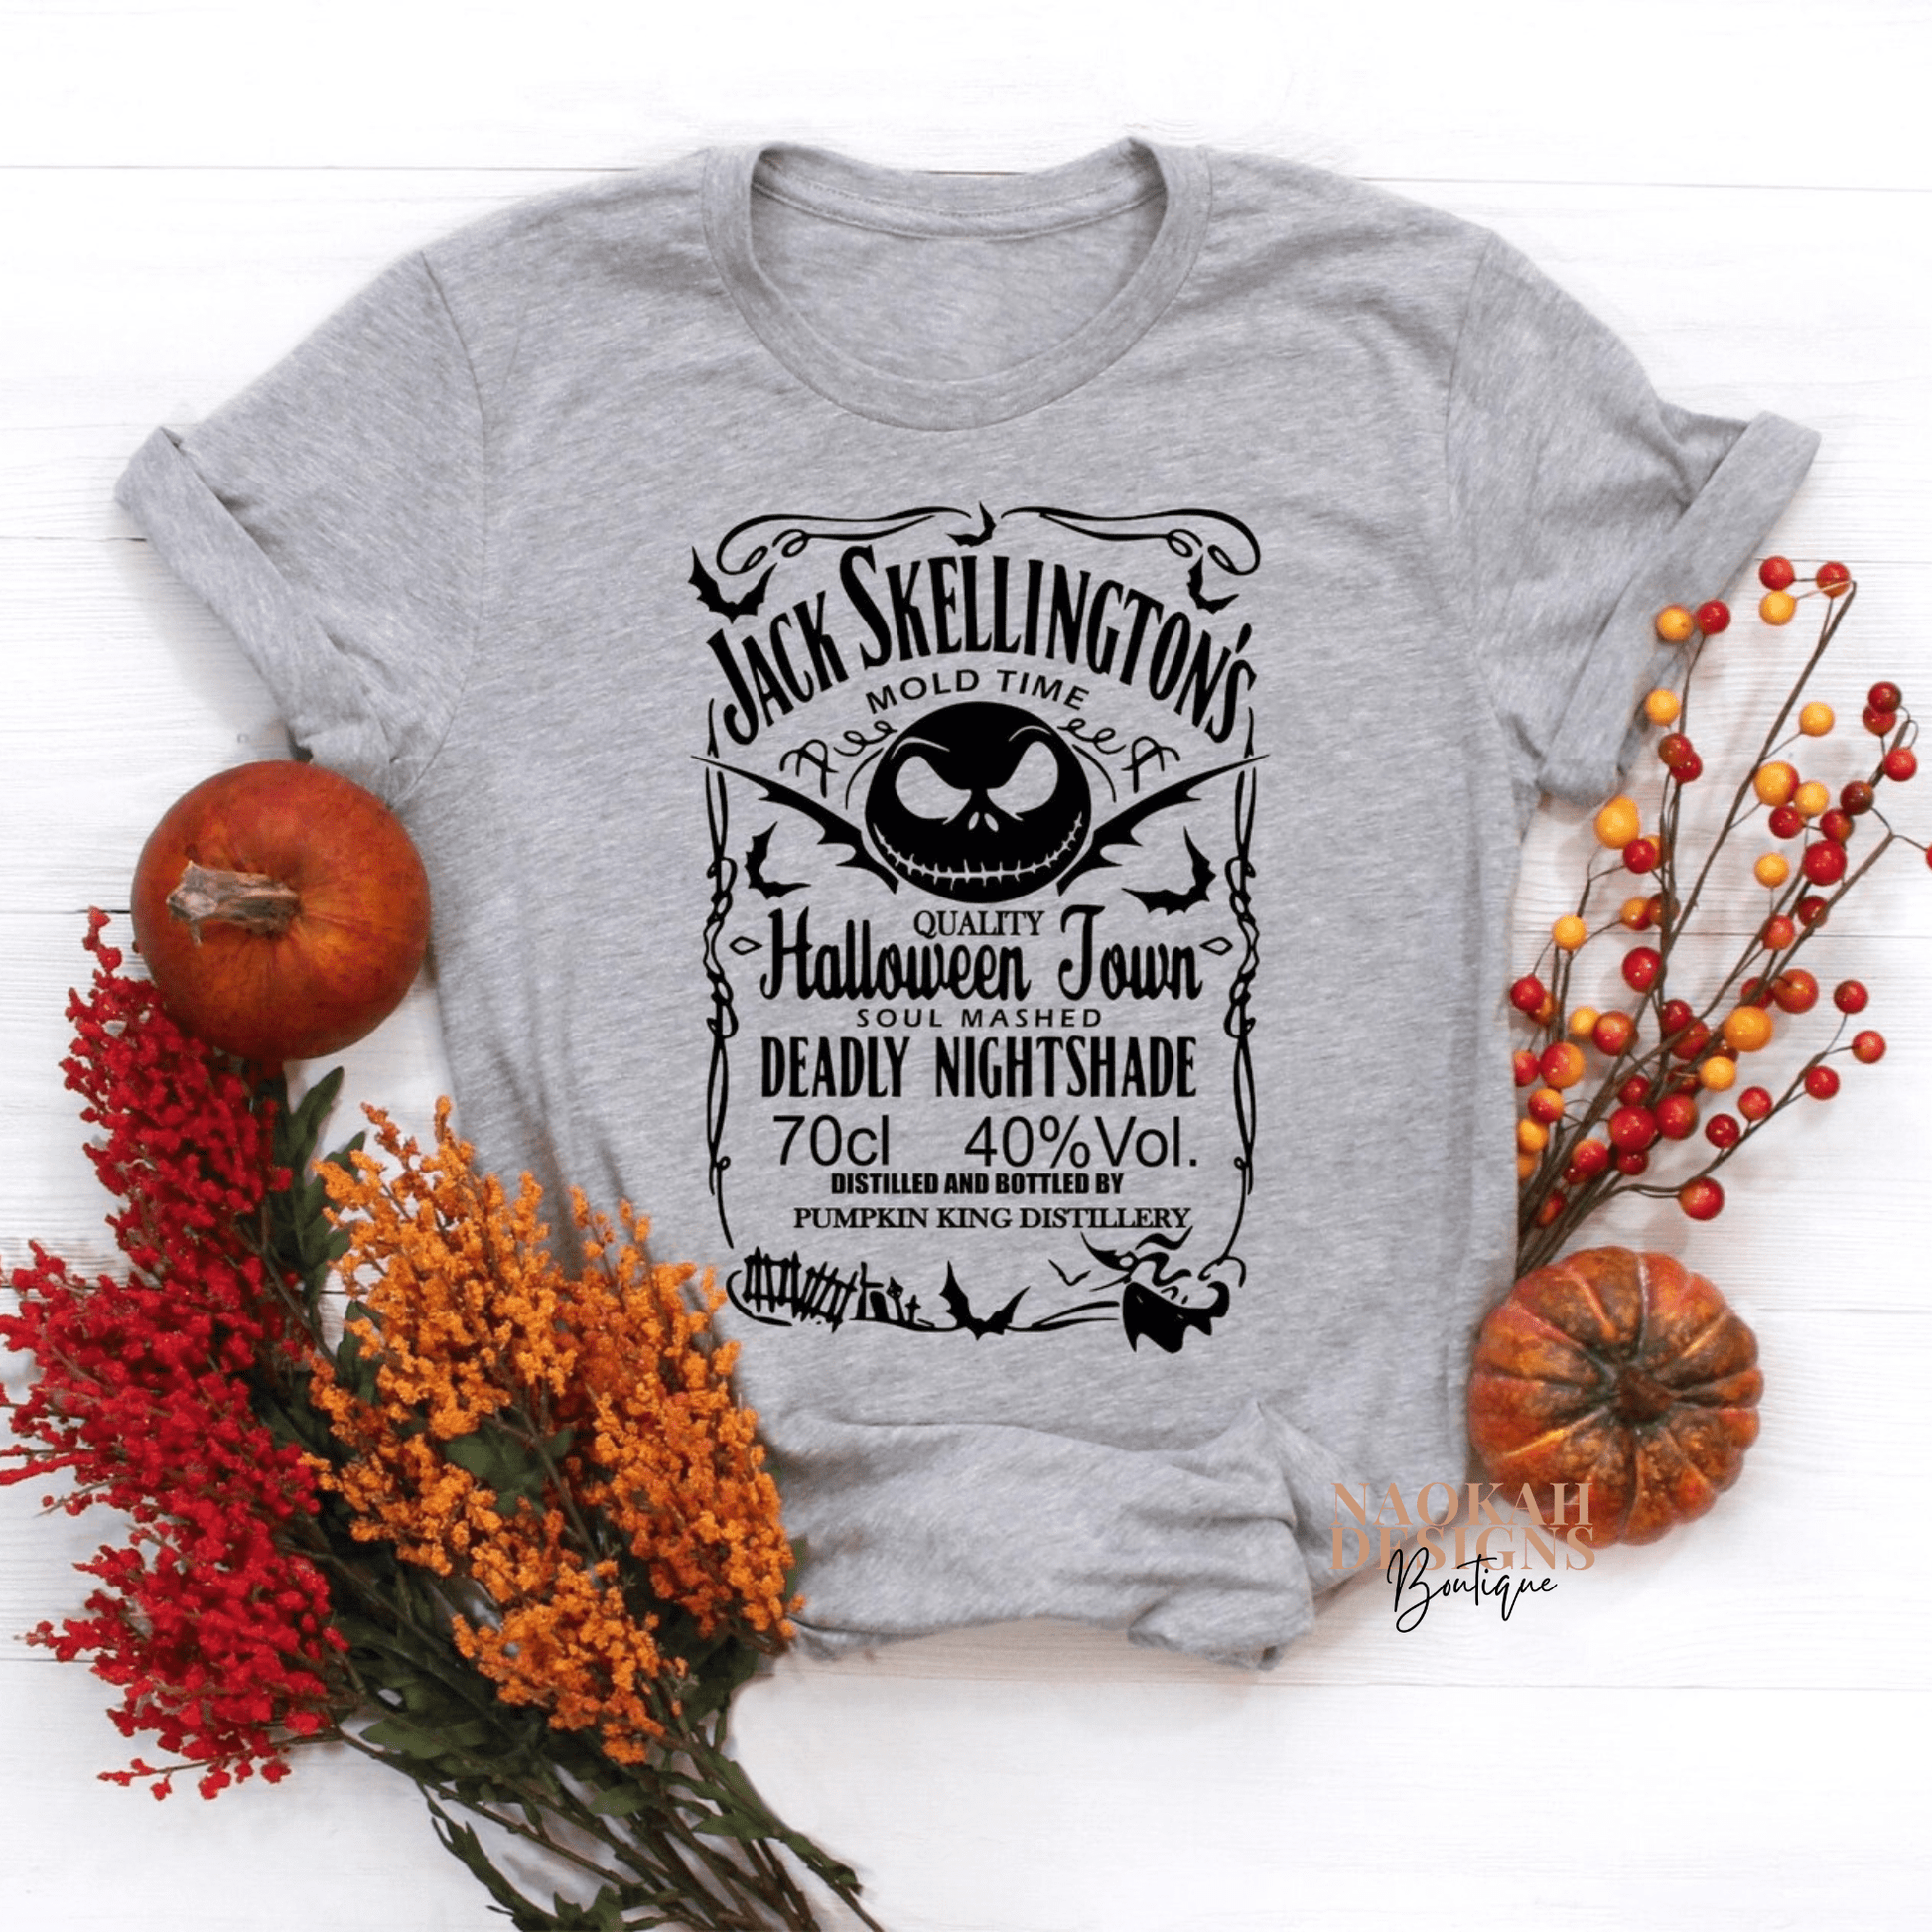 JS deadly nightshade shirt, Jack Skellington deadly nightshade shirt, Halloween town, deadly nightshade, Sally, Jack the pumpkin king